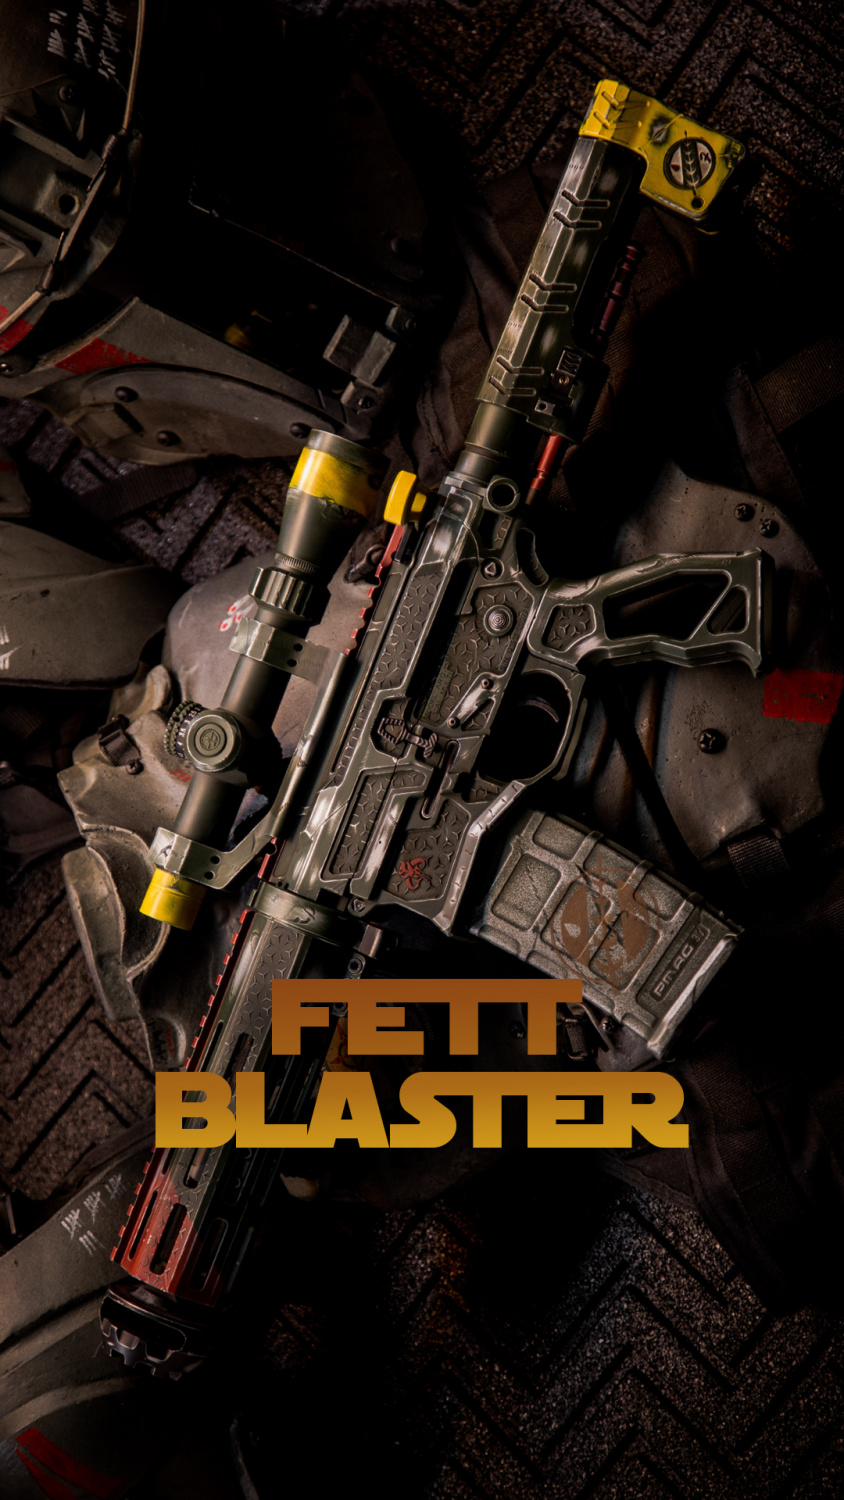 fett-blaster-igtv-thumbnail-f8543b746c6a0d5559051b6b6c7aebd6.jpg